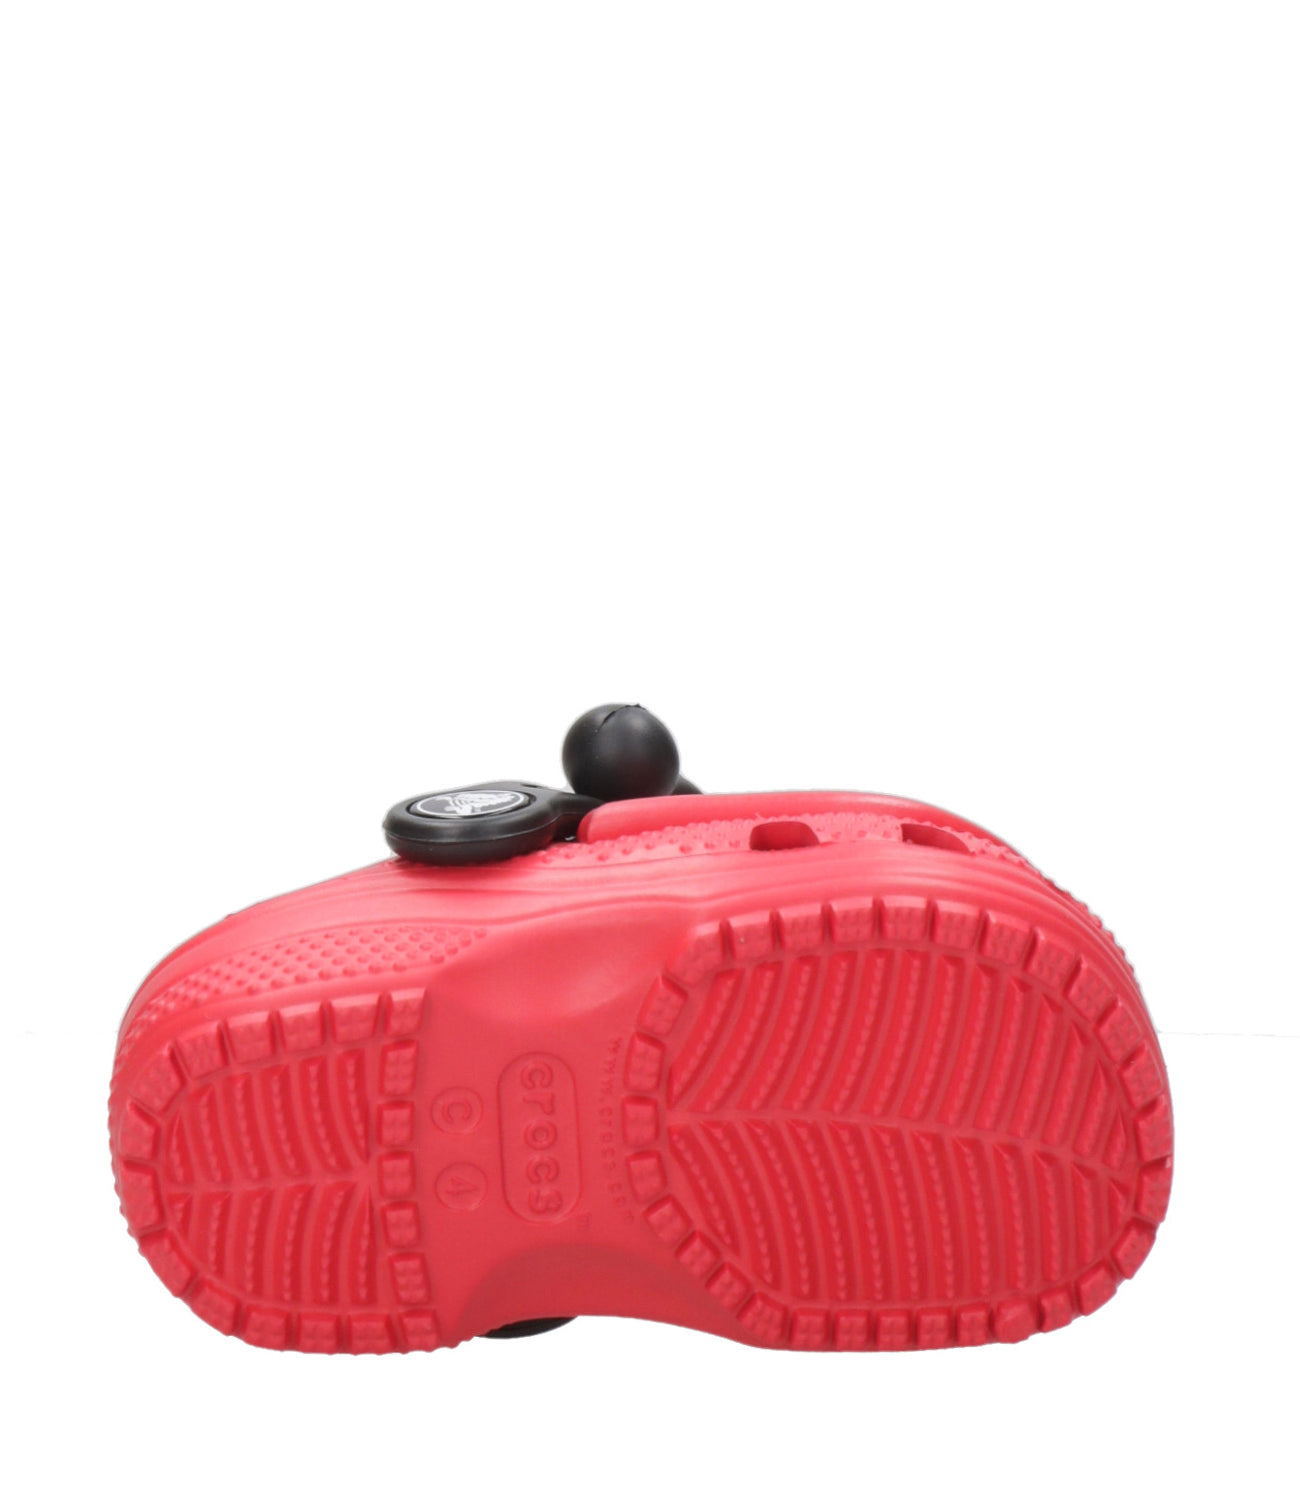 Crocs Kids | Classic Ladybug Clog Red and Black Sabot